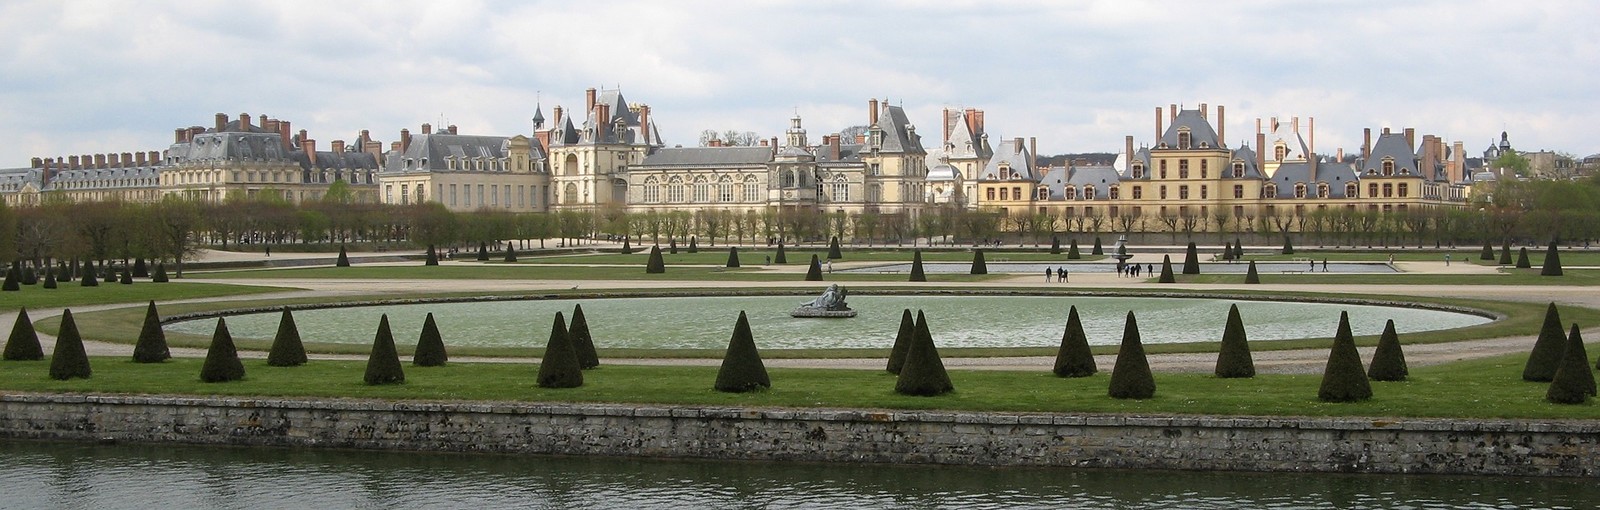 Tours Fontainebleau y Vaux-le-Vicomte - Días completos - Excursiones desde París